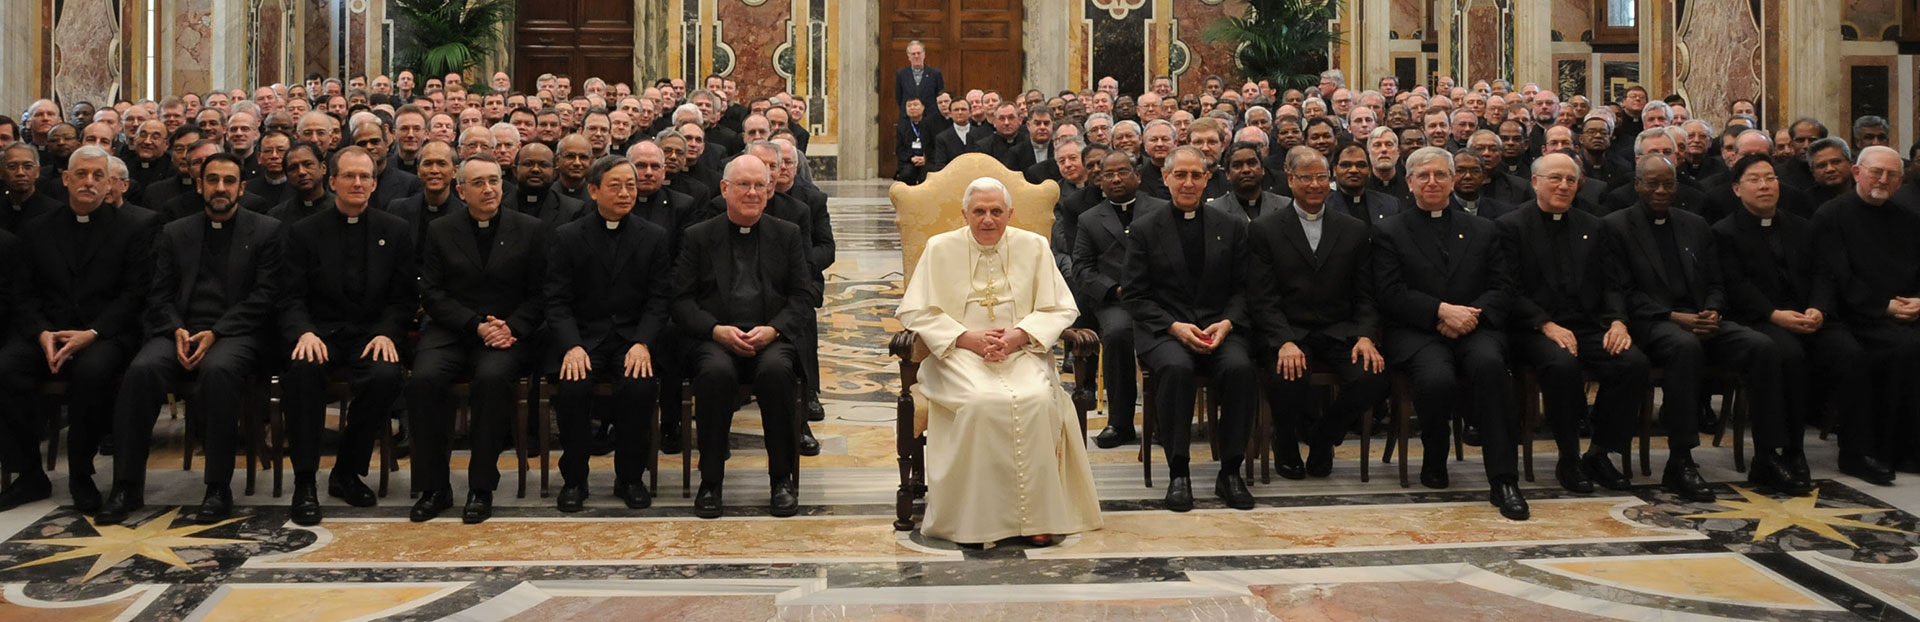 Pope Emeritus Benedict XVI: “Society of Jesus shares the sorrow of the whole Church” says Fr Sosa